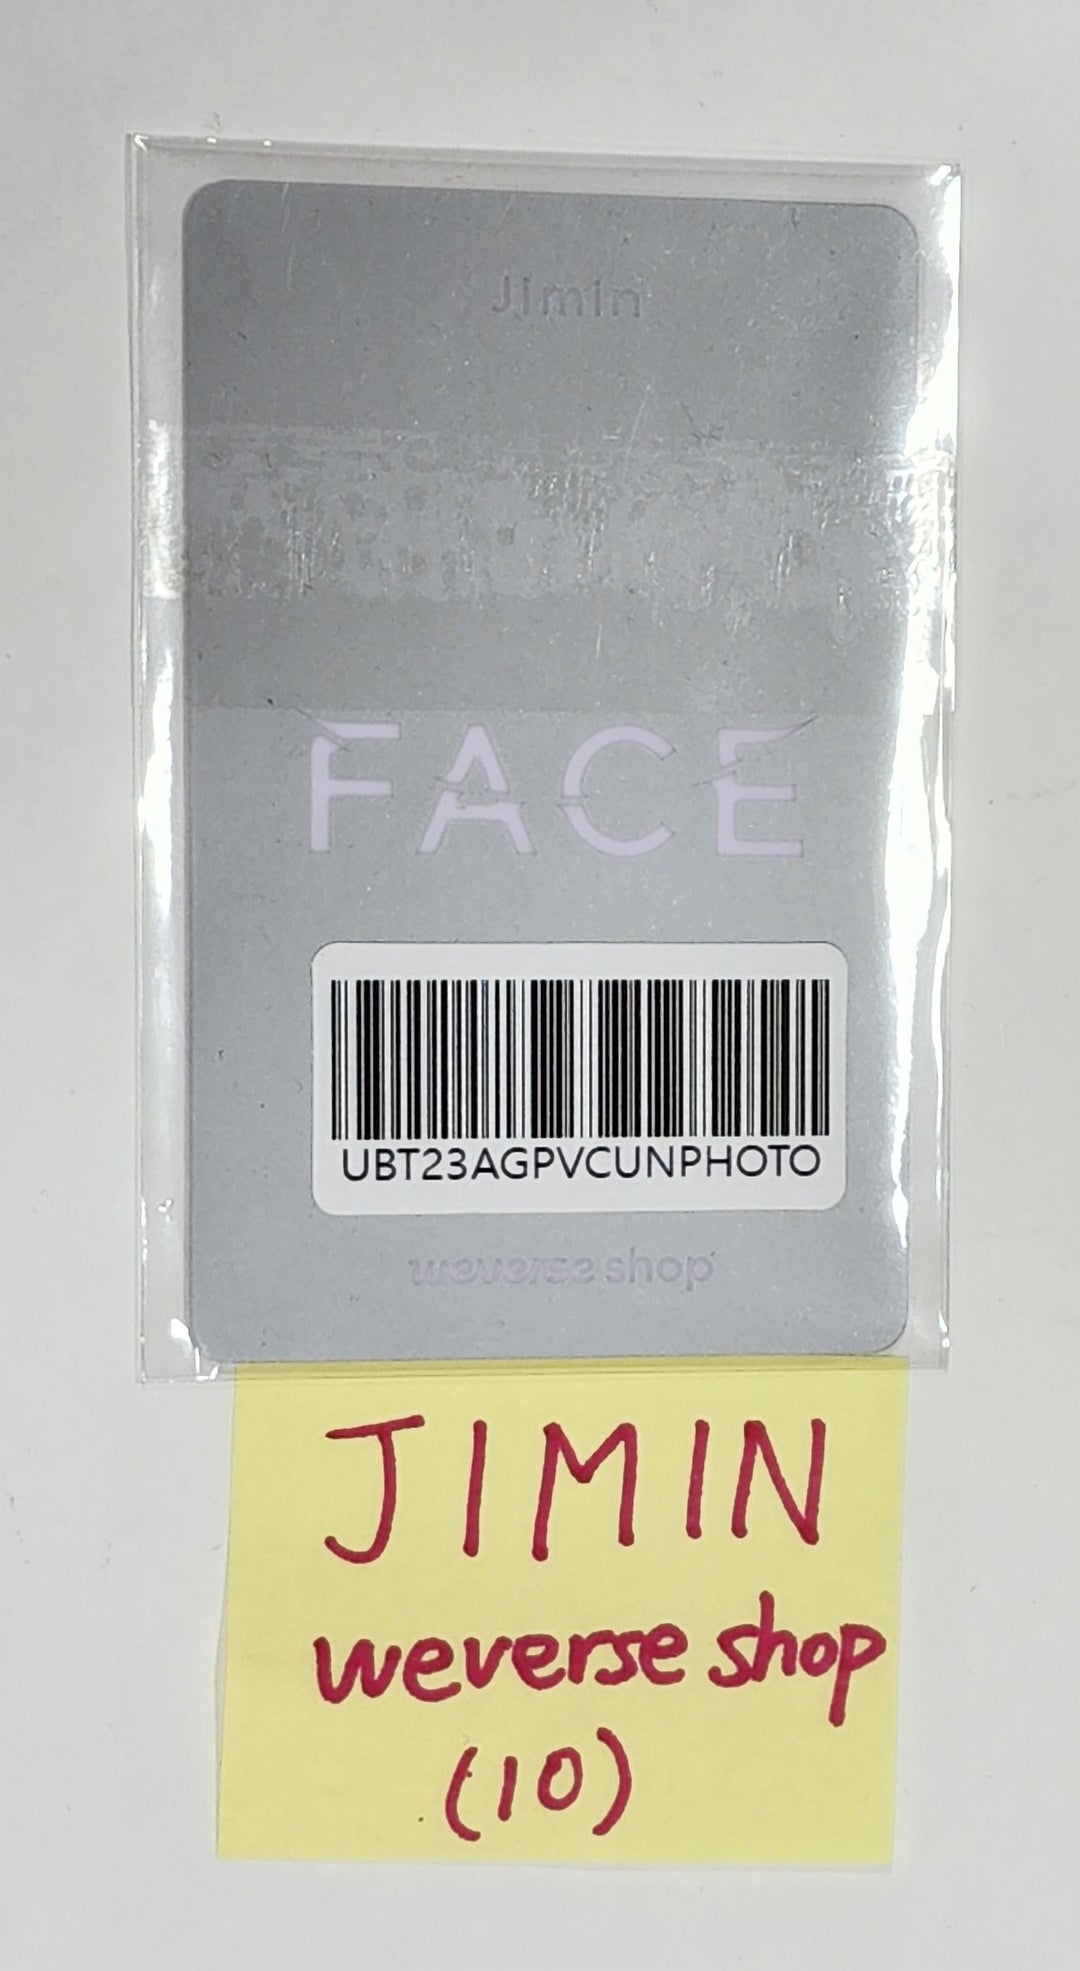 Jimin (Of BTS) "FACE" - Weverse Shop Pre-Order Benefit PVC Photocard